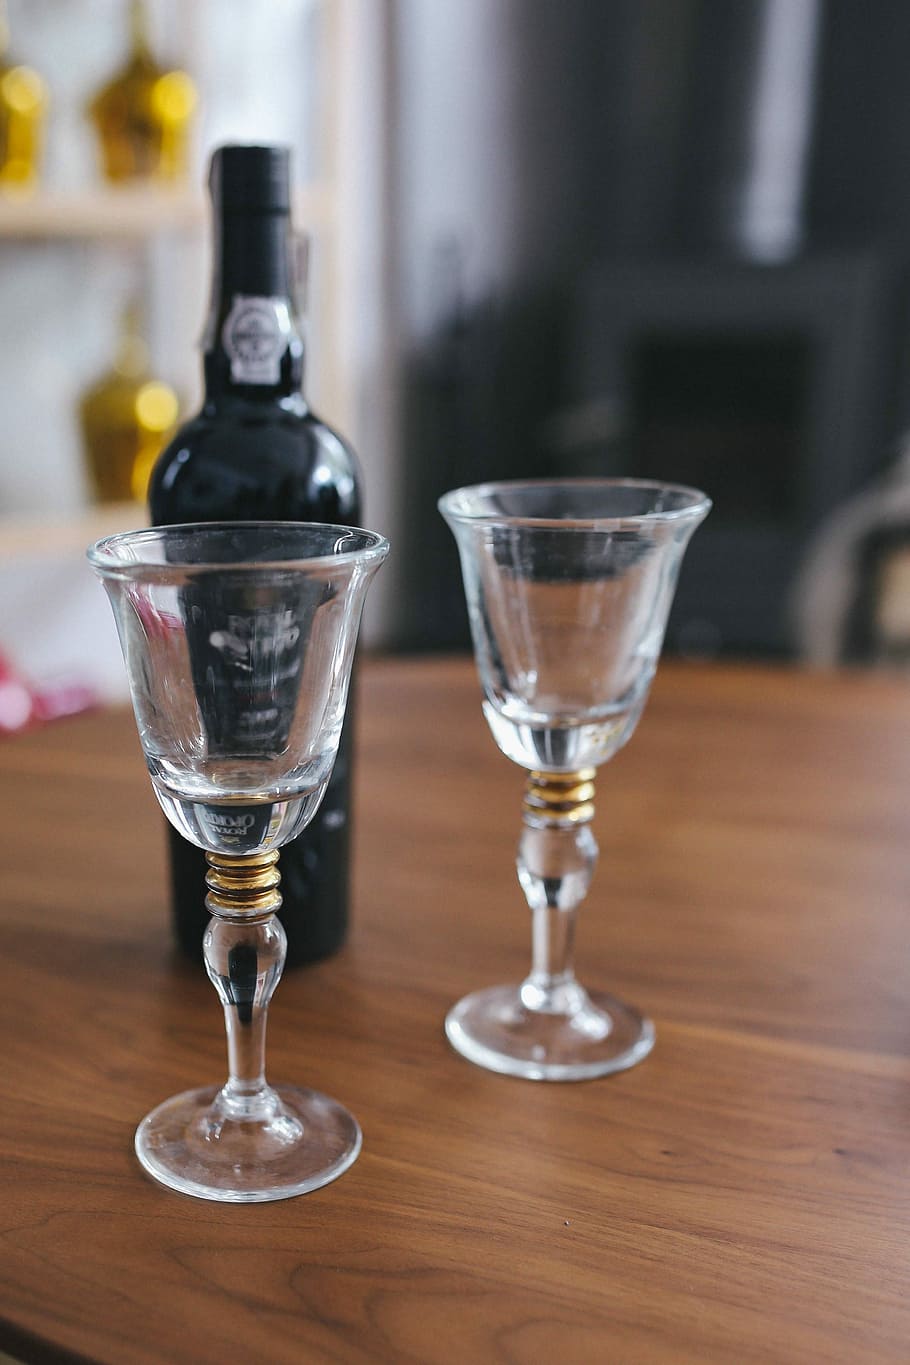 two, empty, wine glasses, bottle, table, bottle of wine, glasses, wine, alcohol, glassware